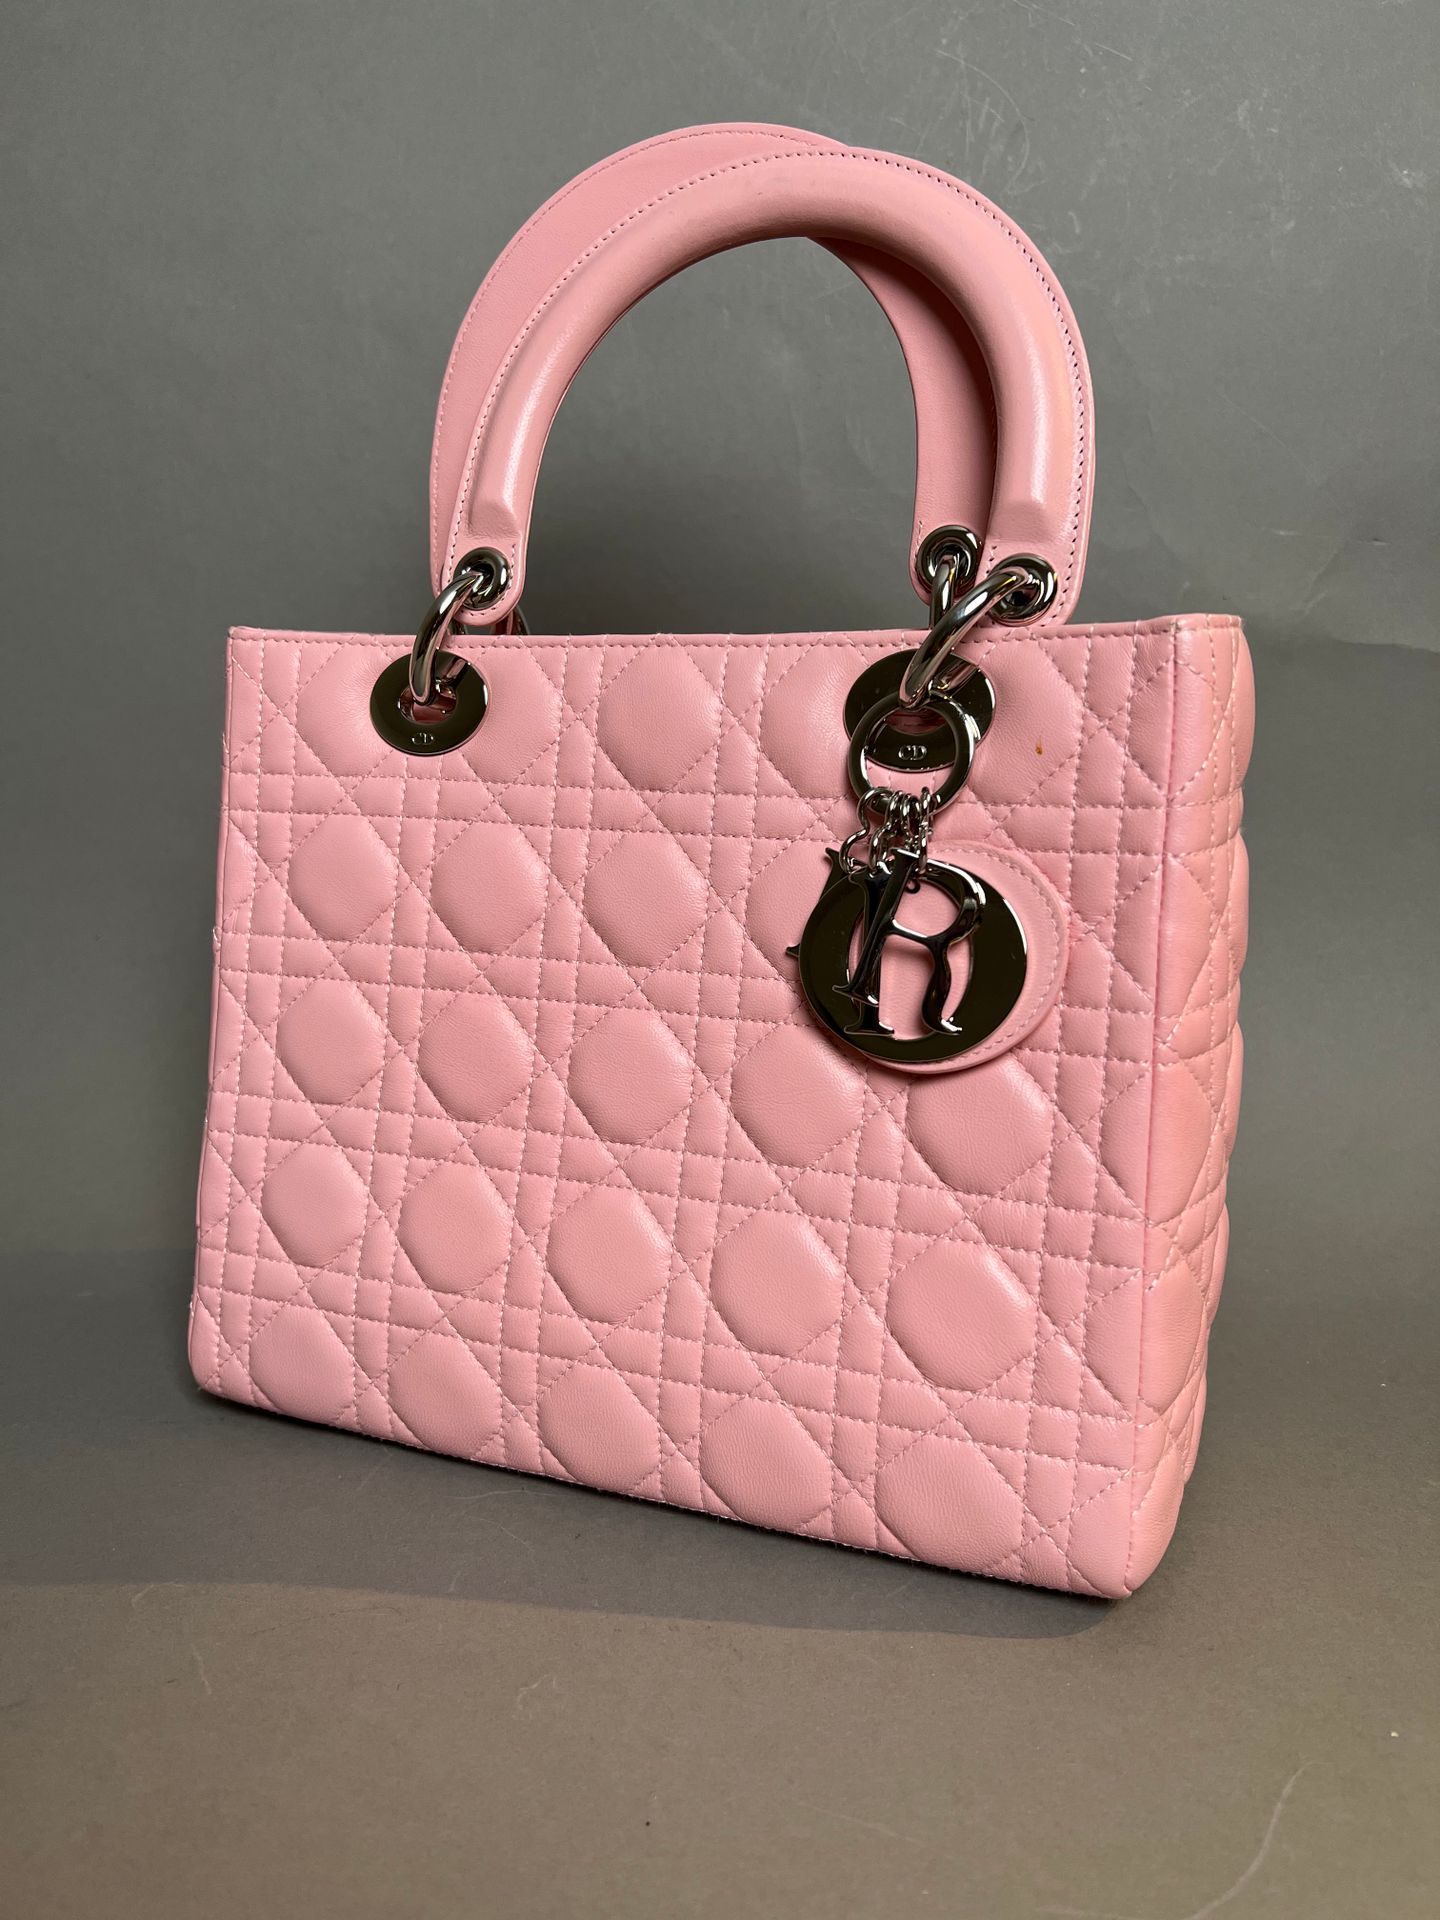 Null 克里斯蒂安-迪奥。粉红色藤条皮包，"Lady Dior "型号，带有银色吊饰吊坠。21 x 24厘米。尘袋。状况非常好。